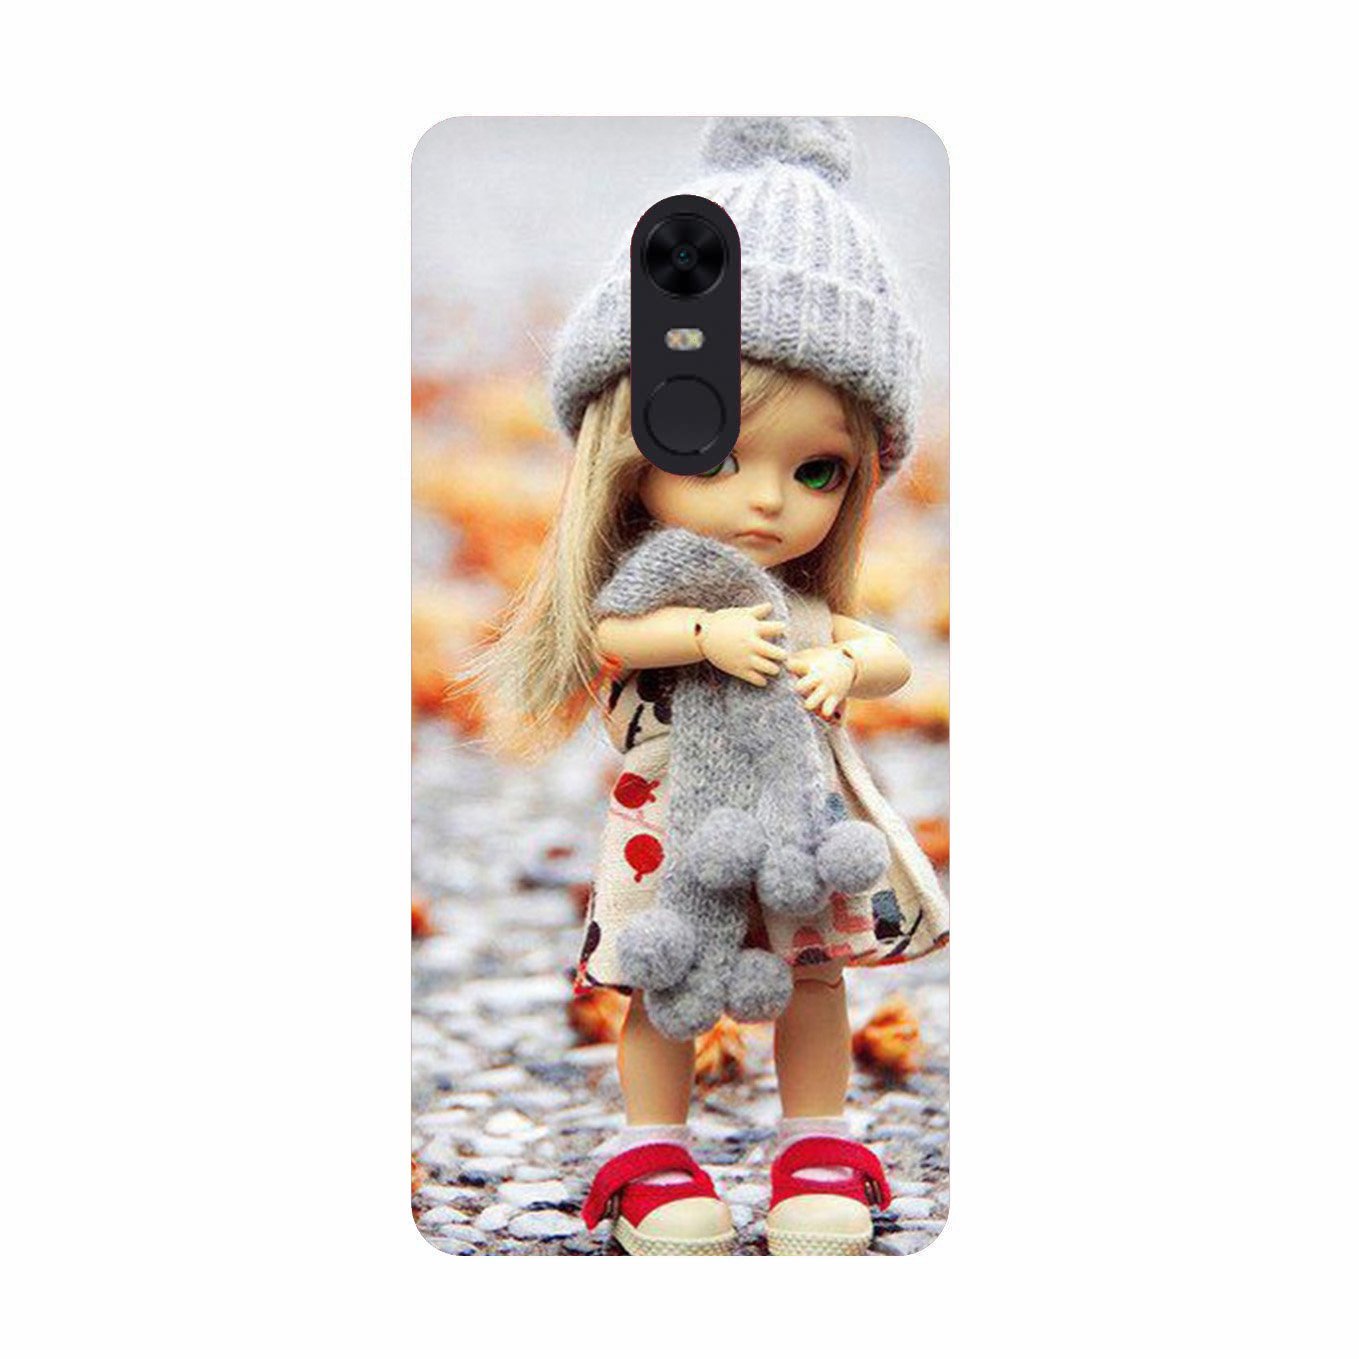 Cute Doll Case for Redmi Note 4